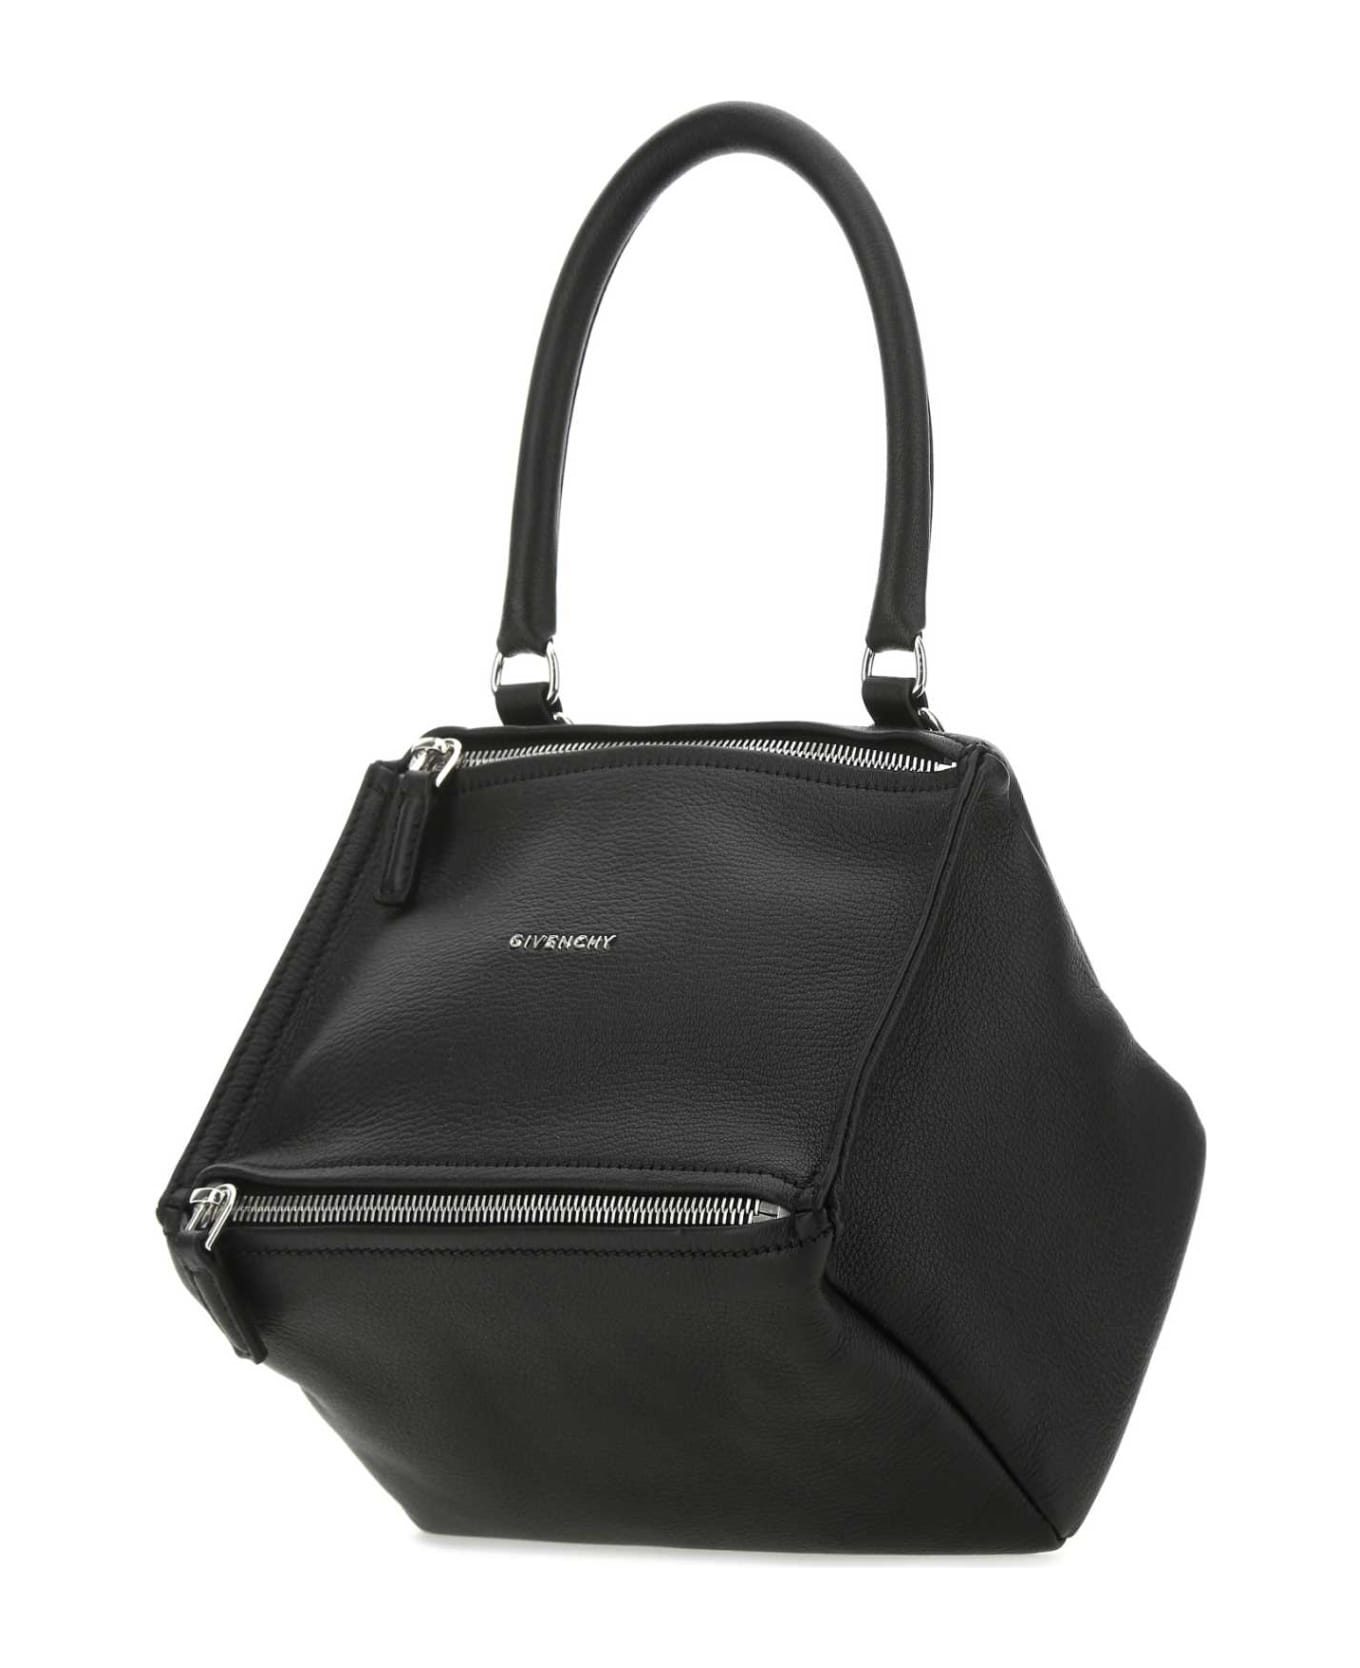 Givenchy Black Leather Small Pandora Handbag - 001